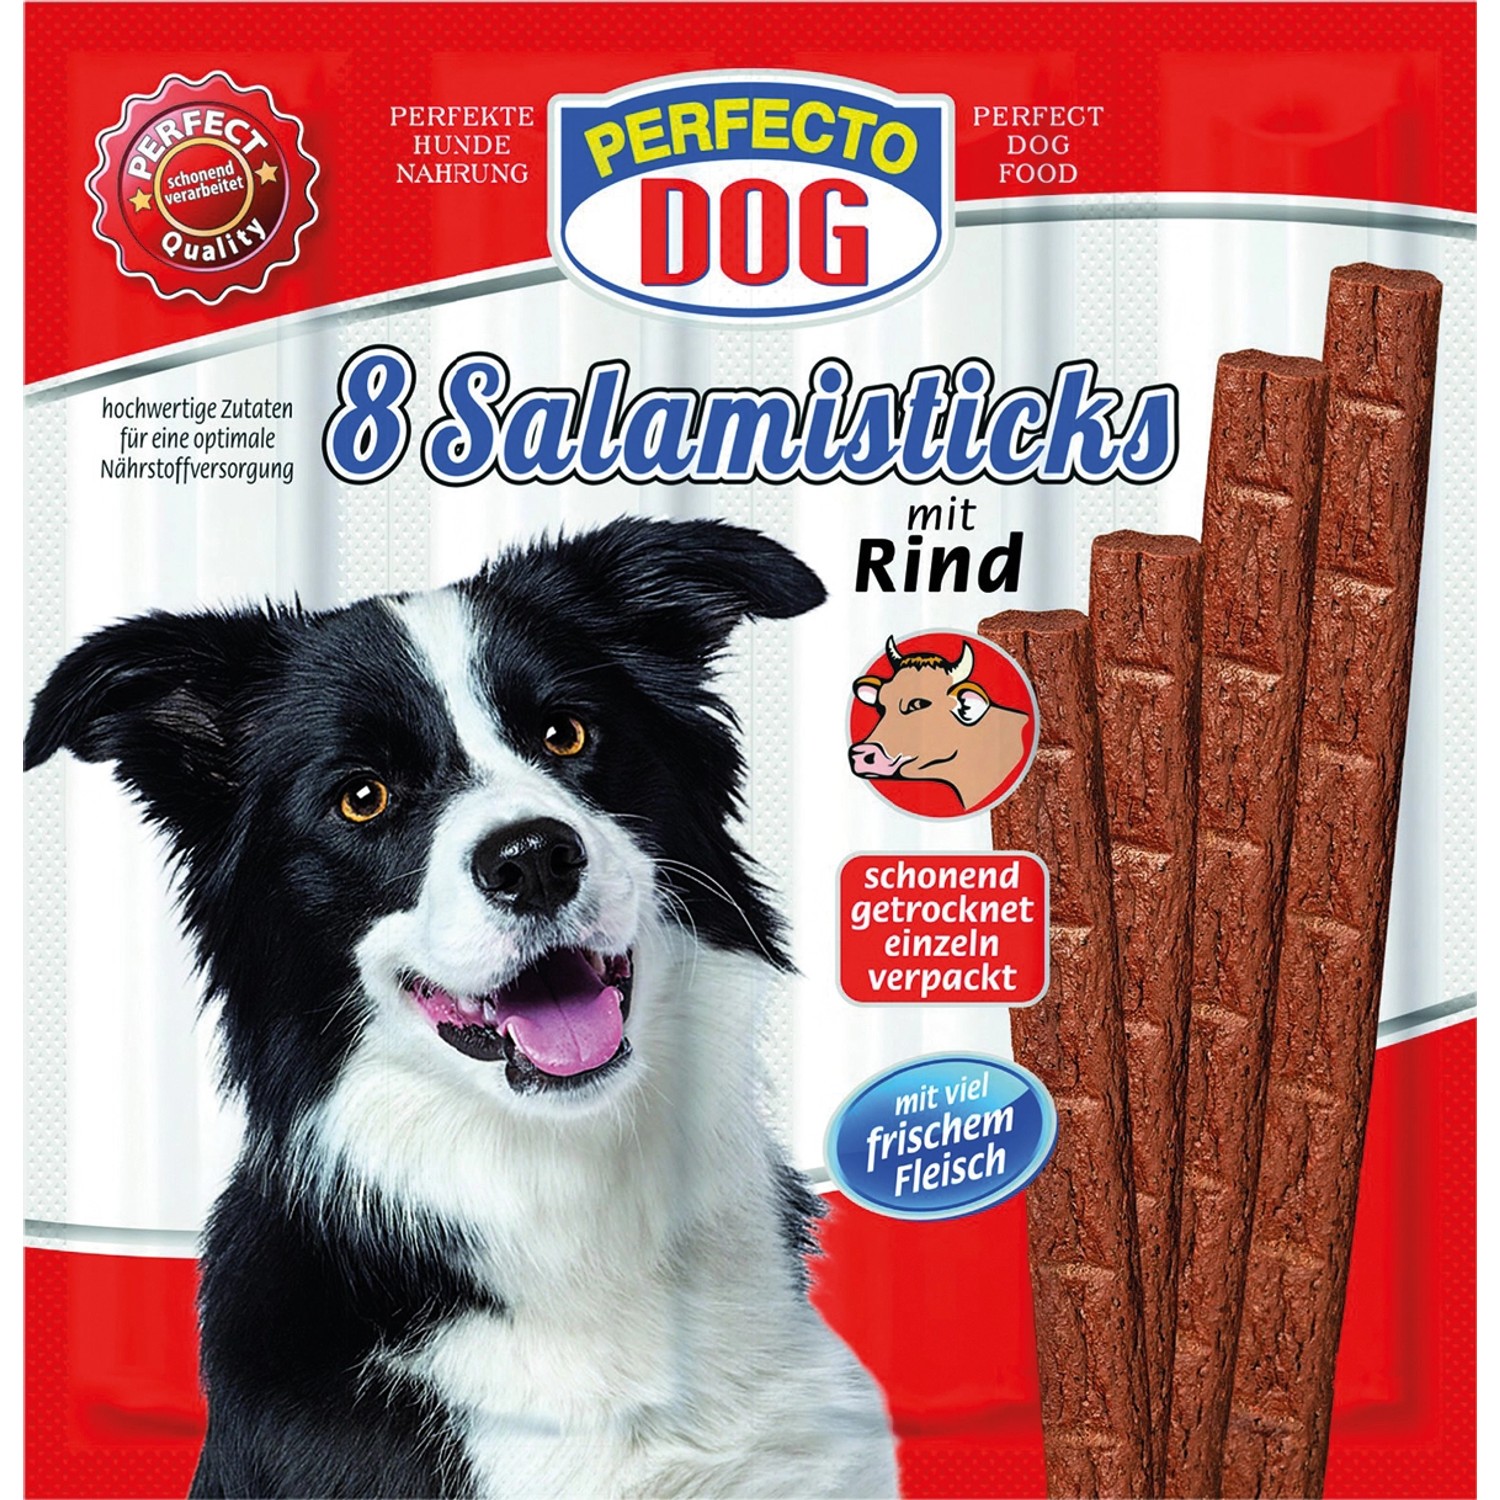 Perfecto Dog Hunde-Snack Salami mit Rind Hunde Snack 8 Stück